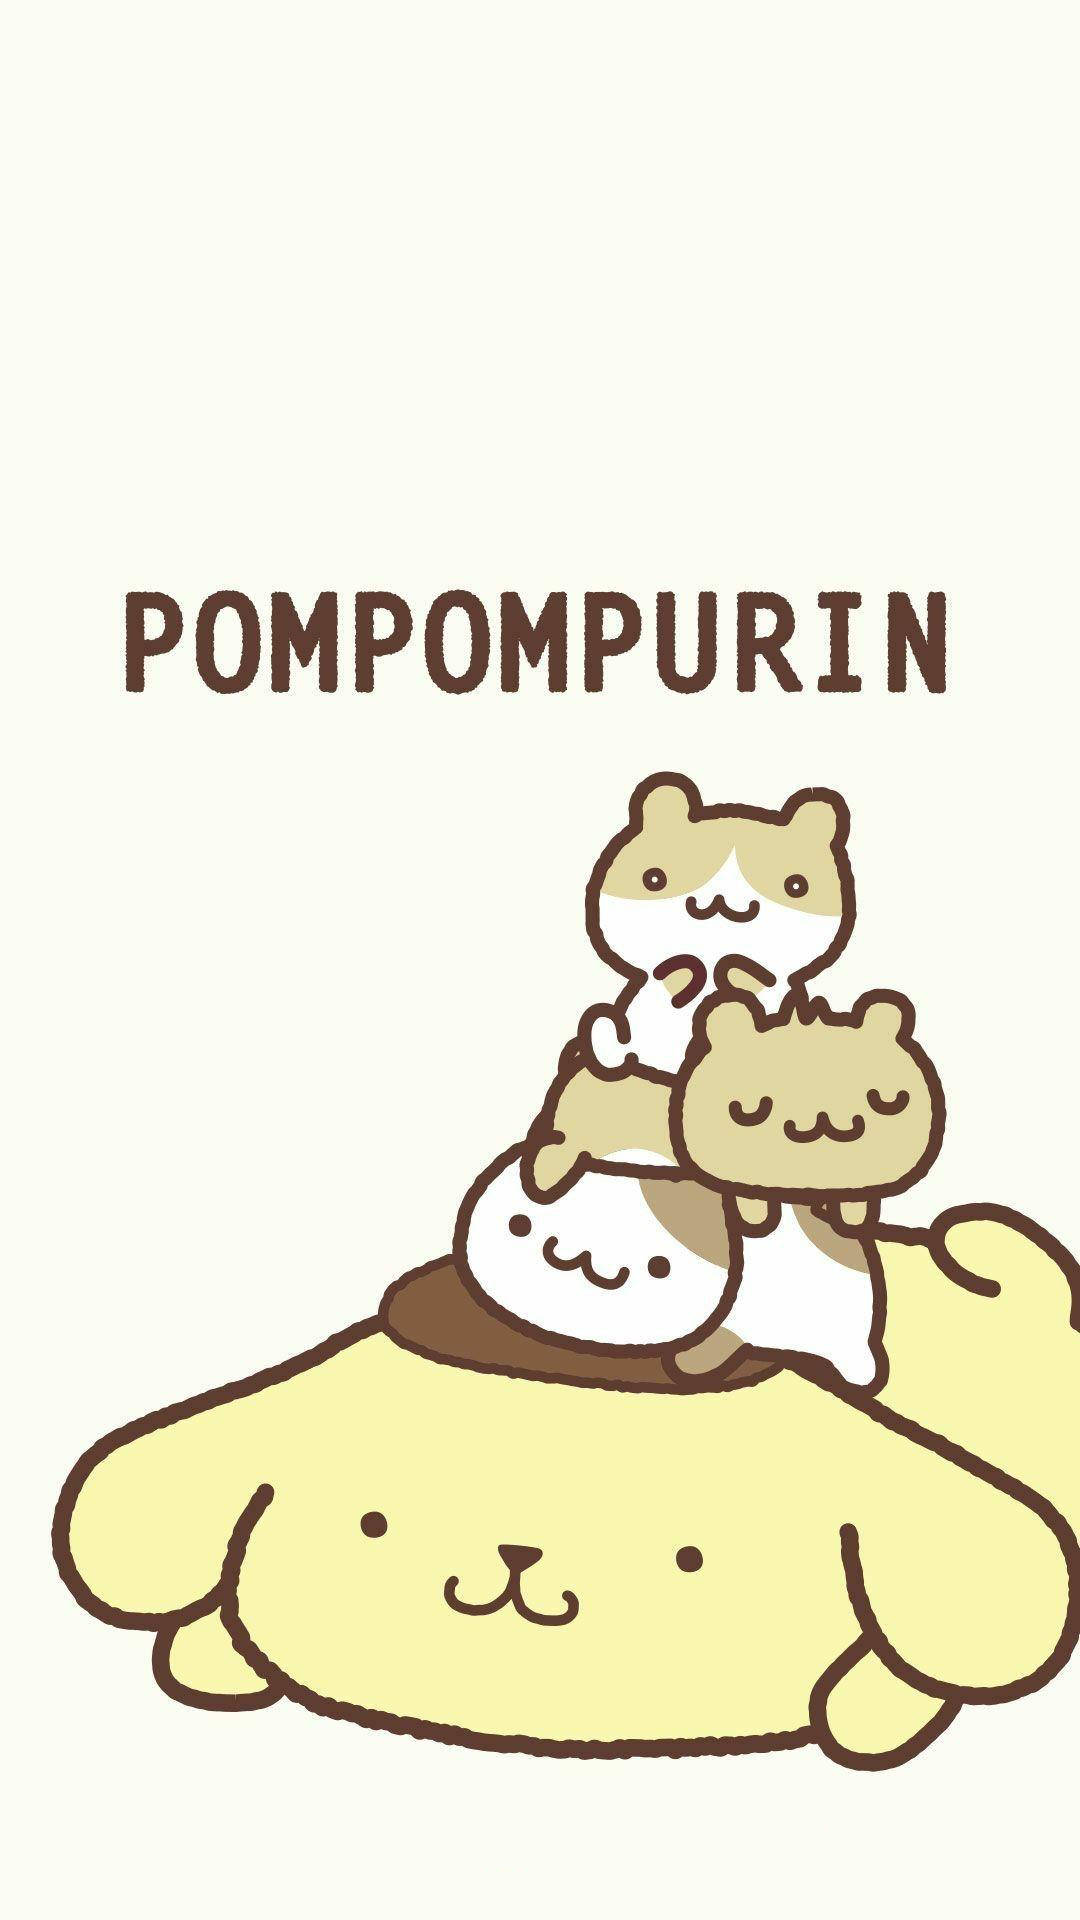 Pompompurin Lying Down